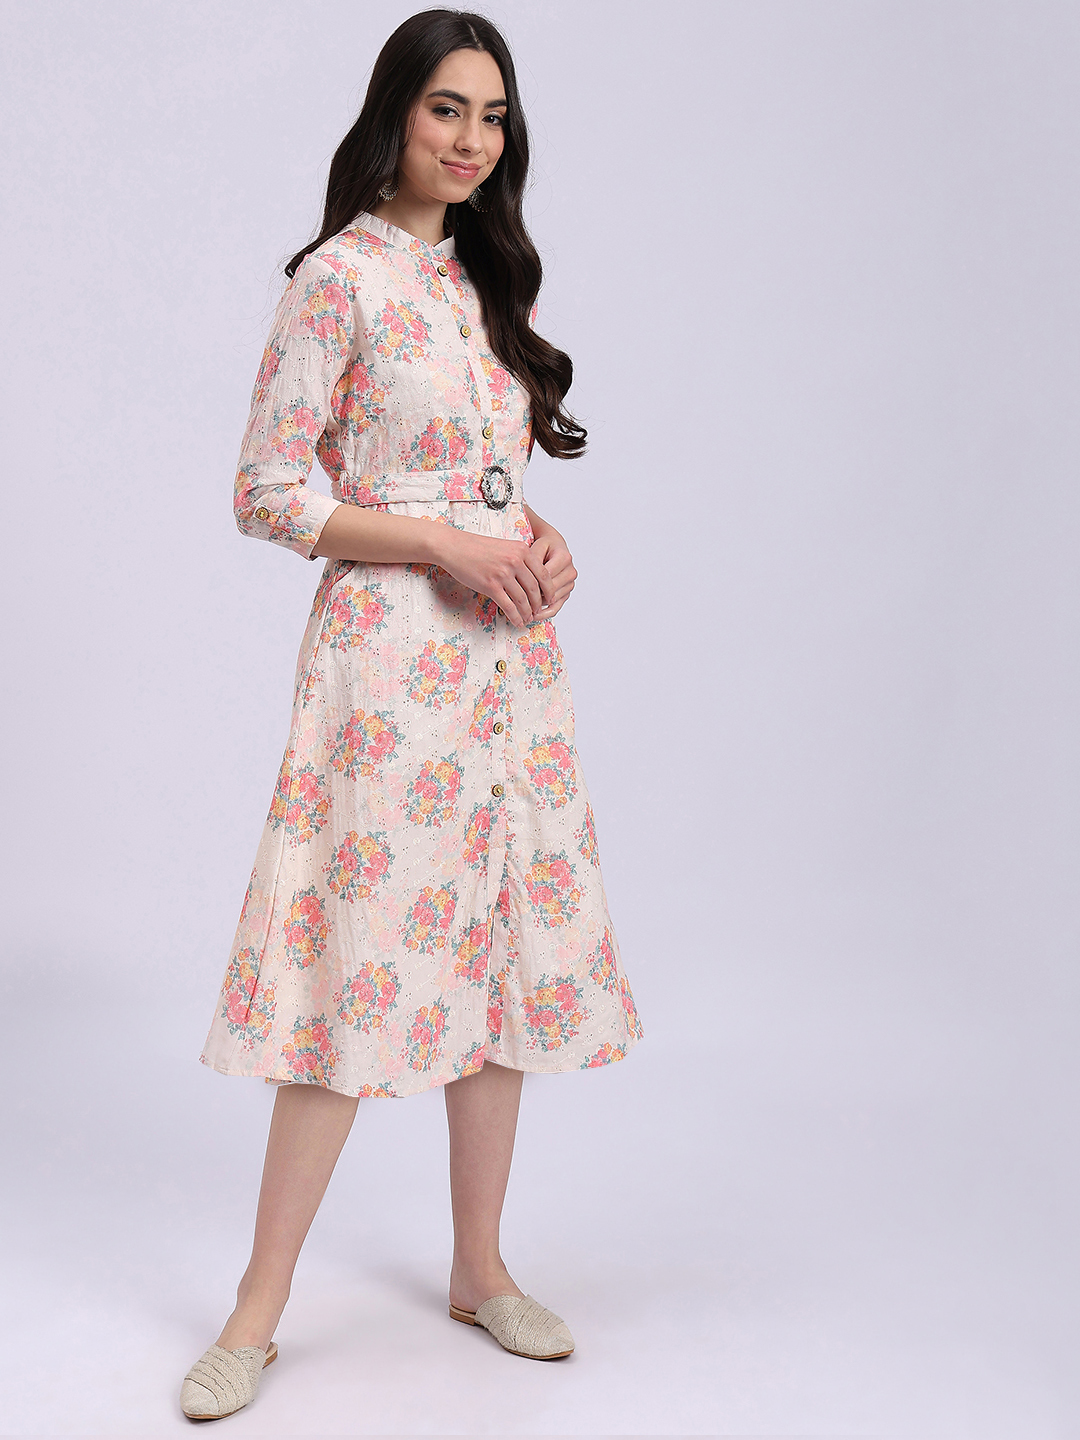 Floral Schifli Tunic Dress Knitstudio